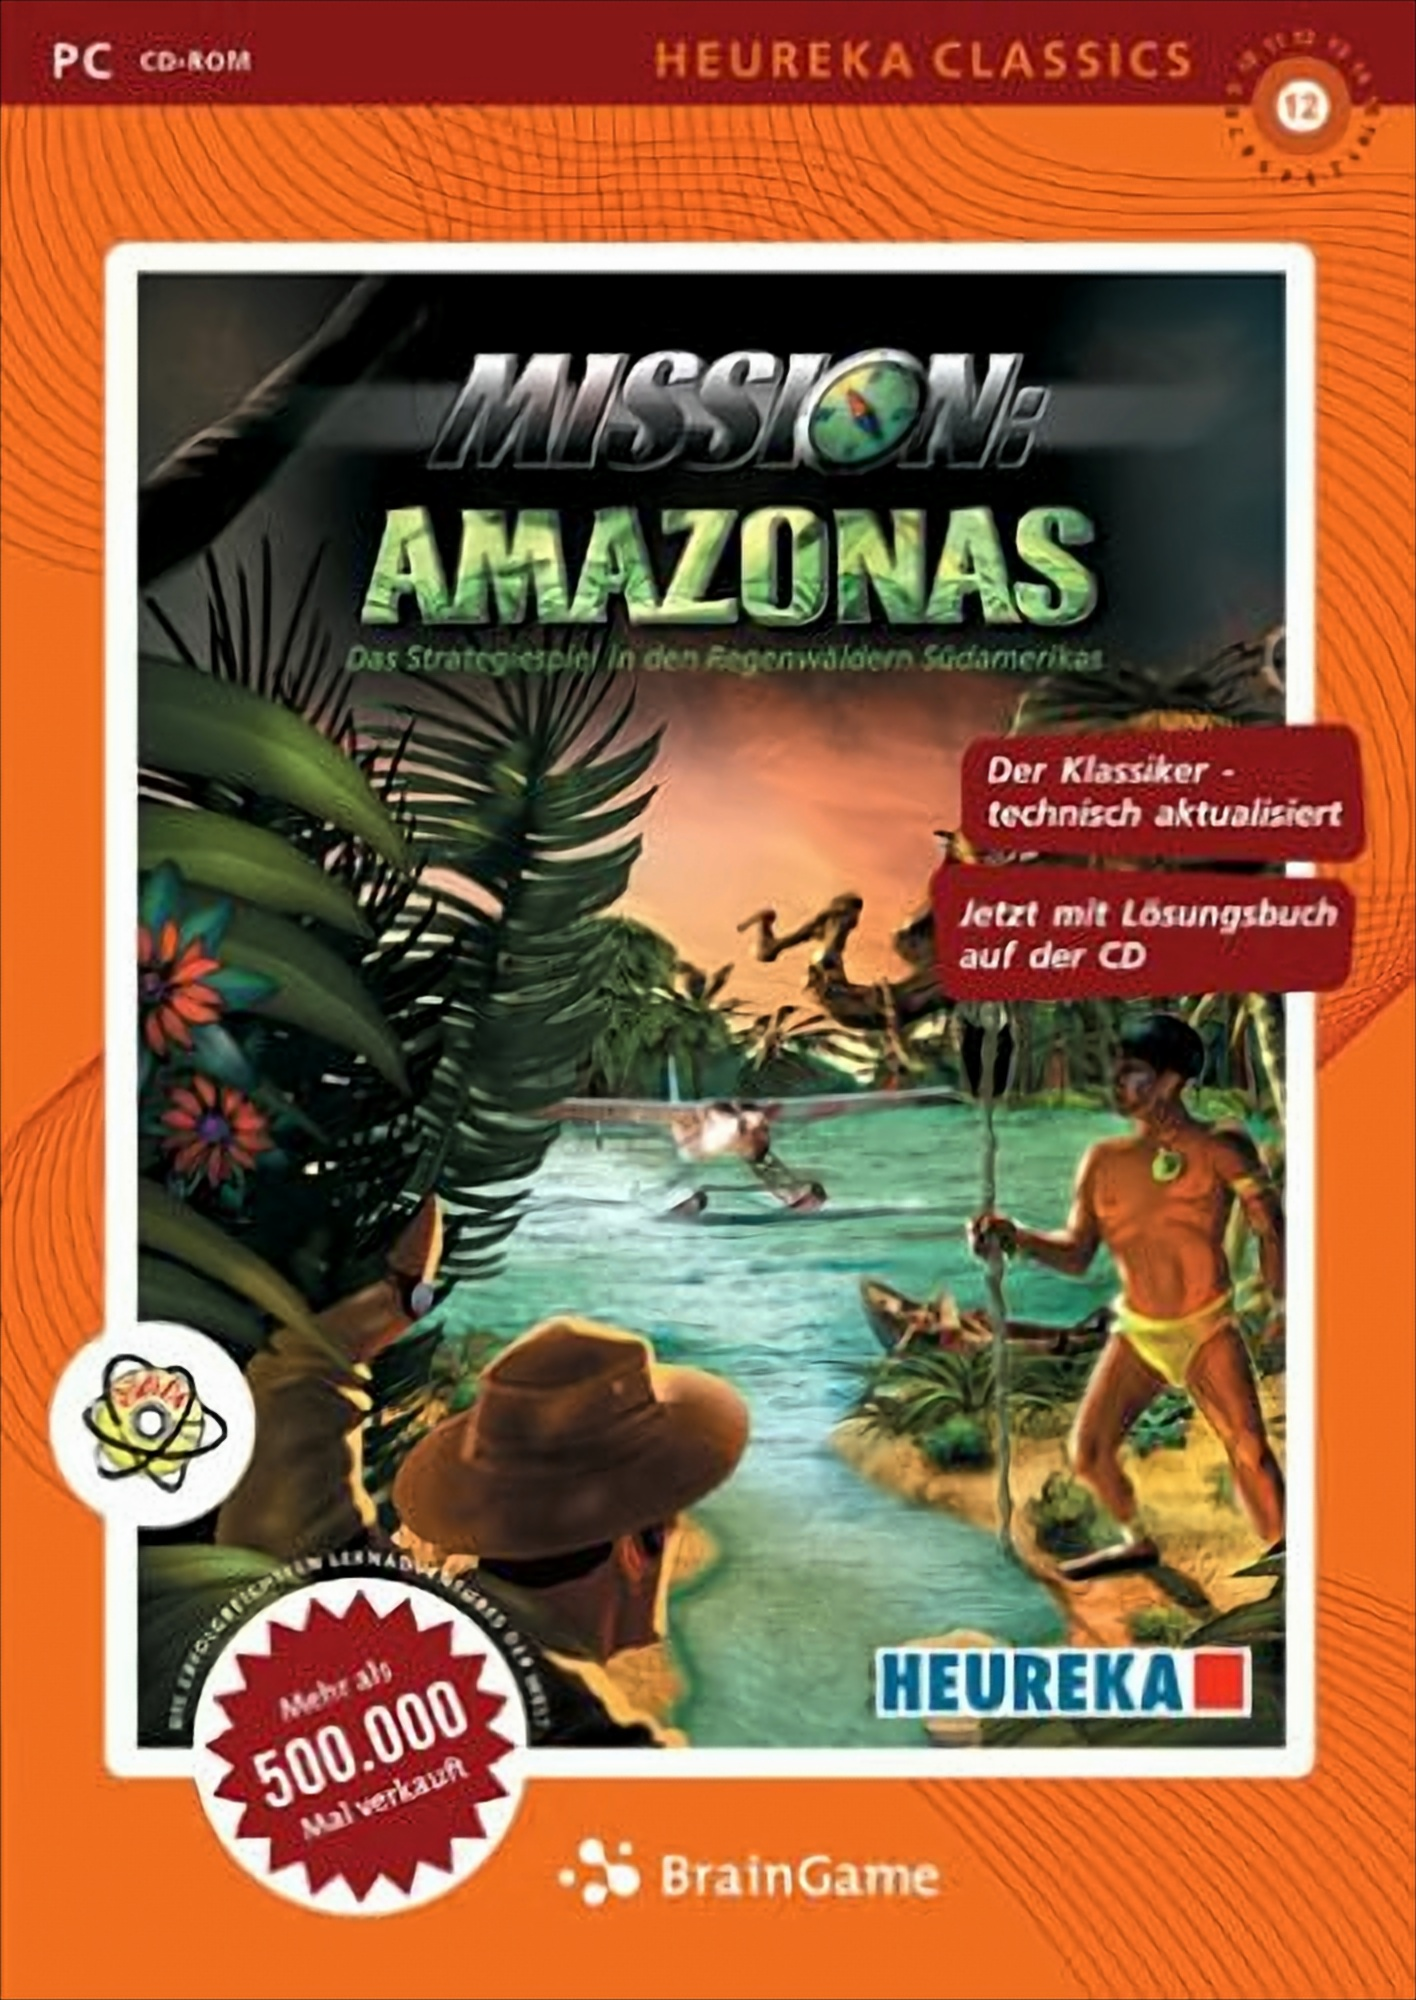 - [PC] Amazonas Mission: (Classics)